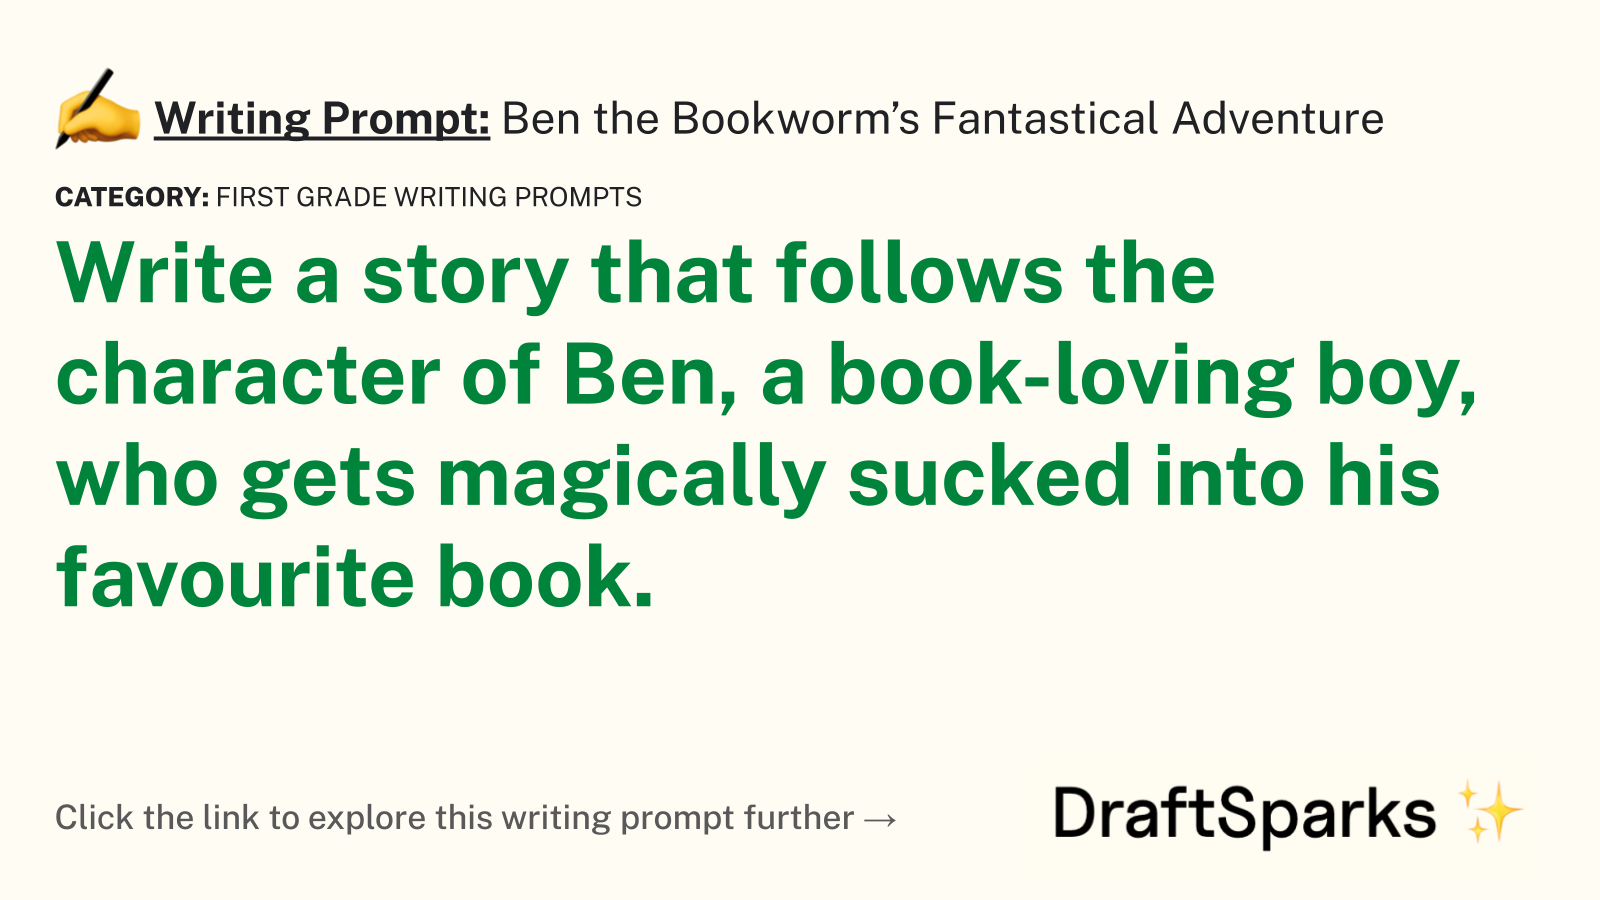 Ben the Bookworm’s Fantastical Adventure